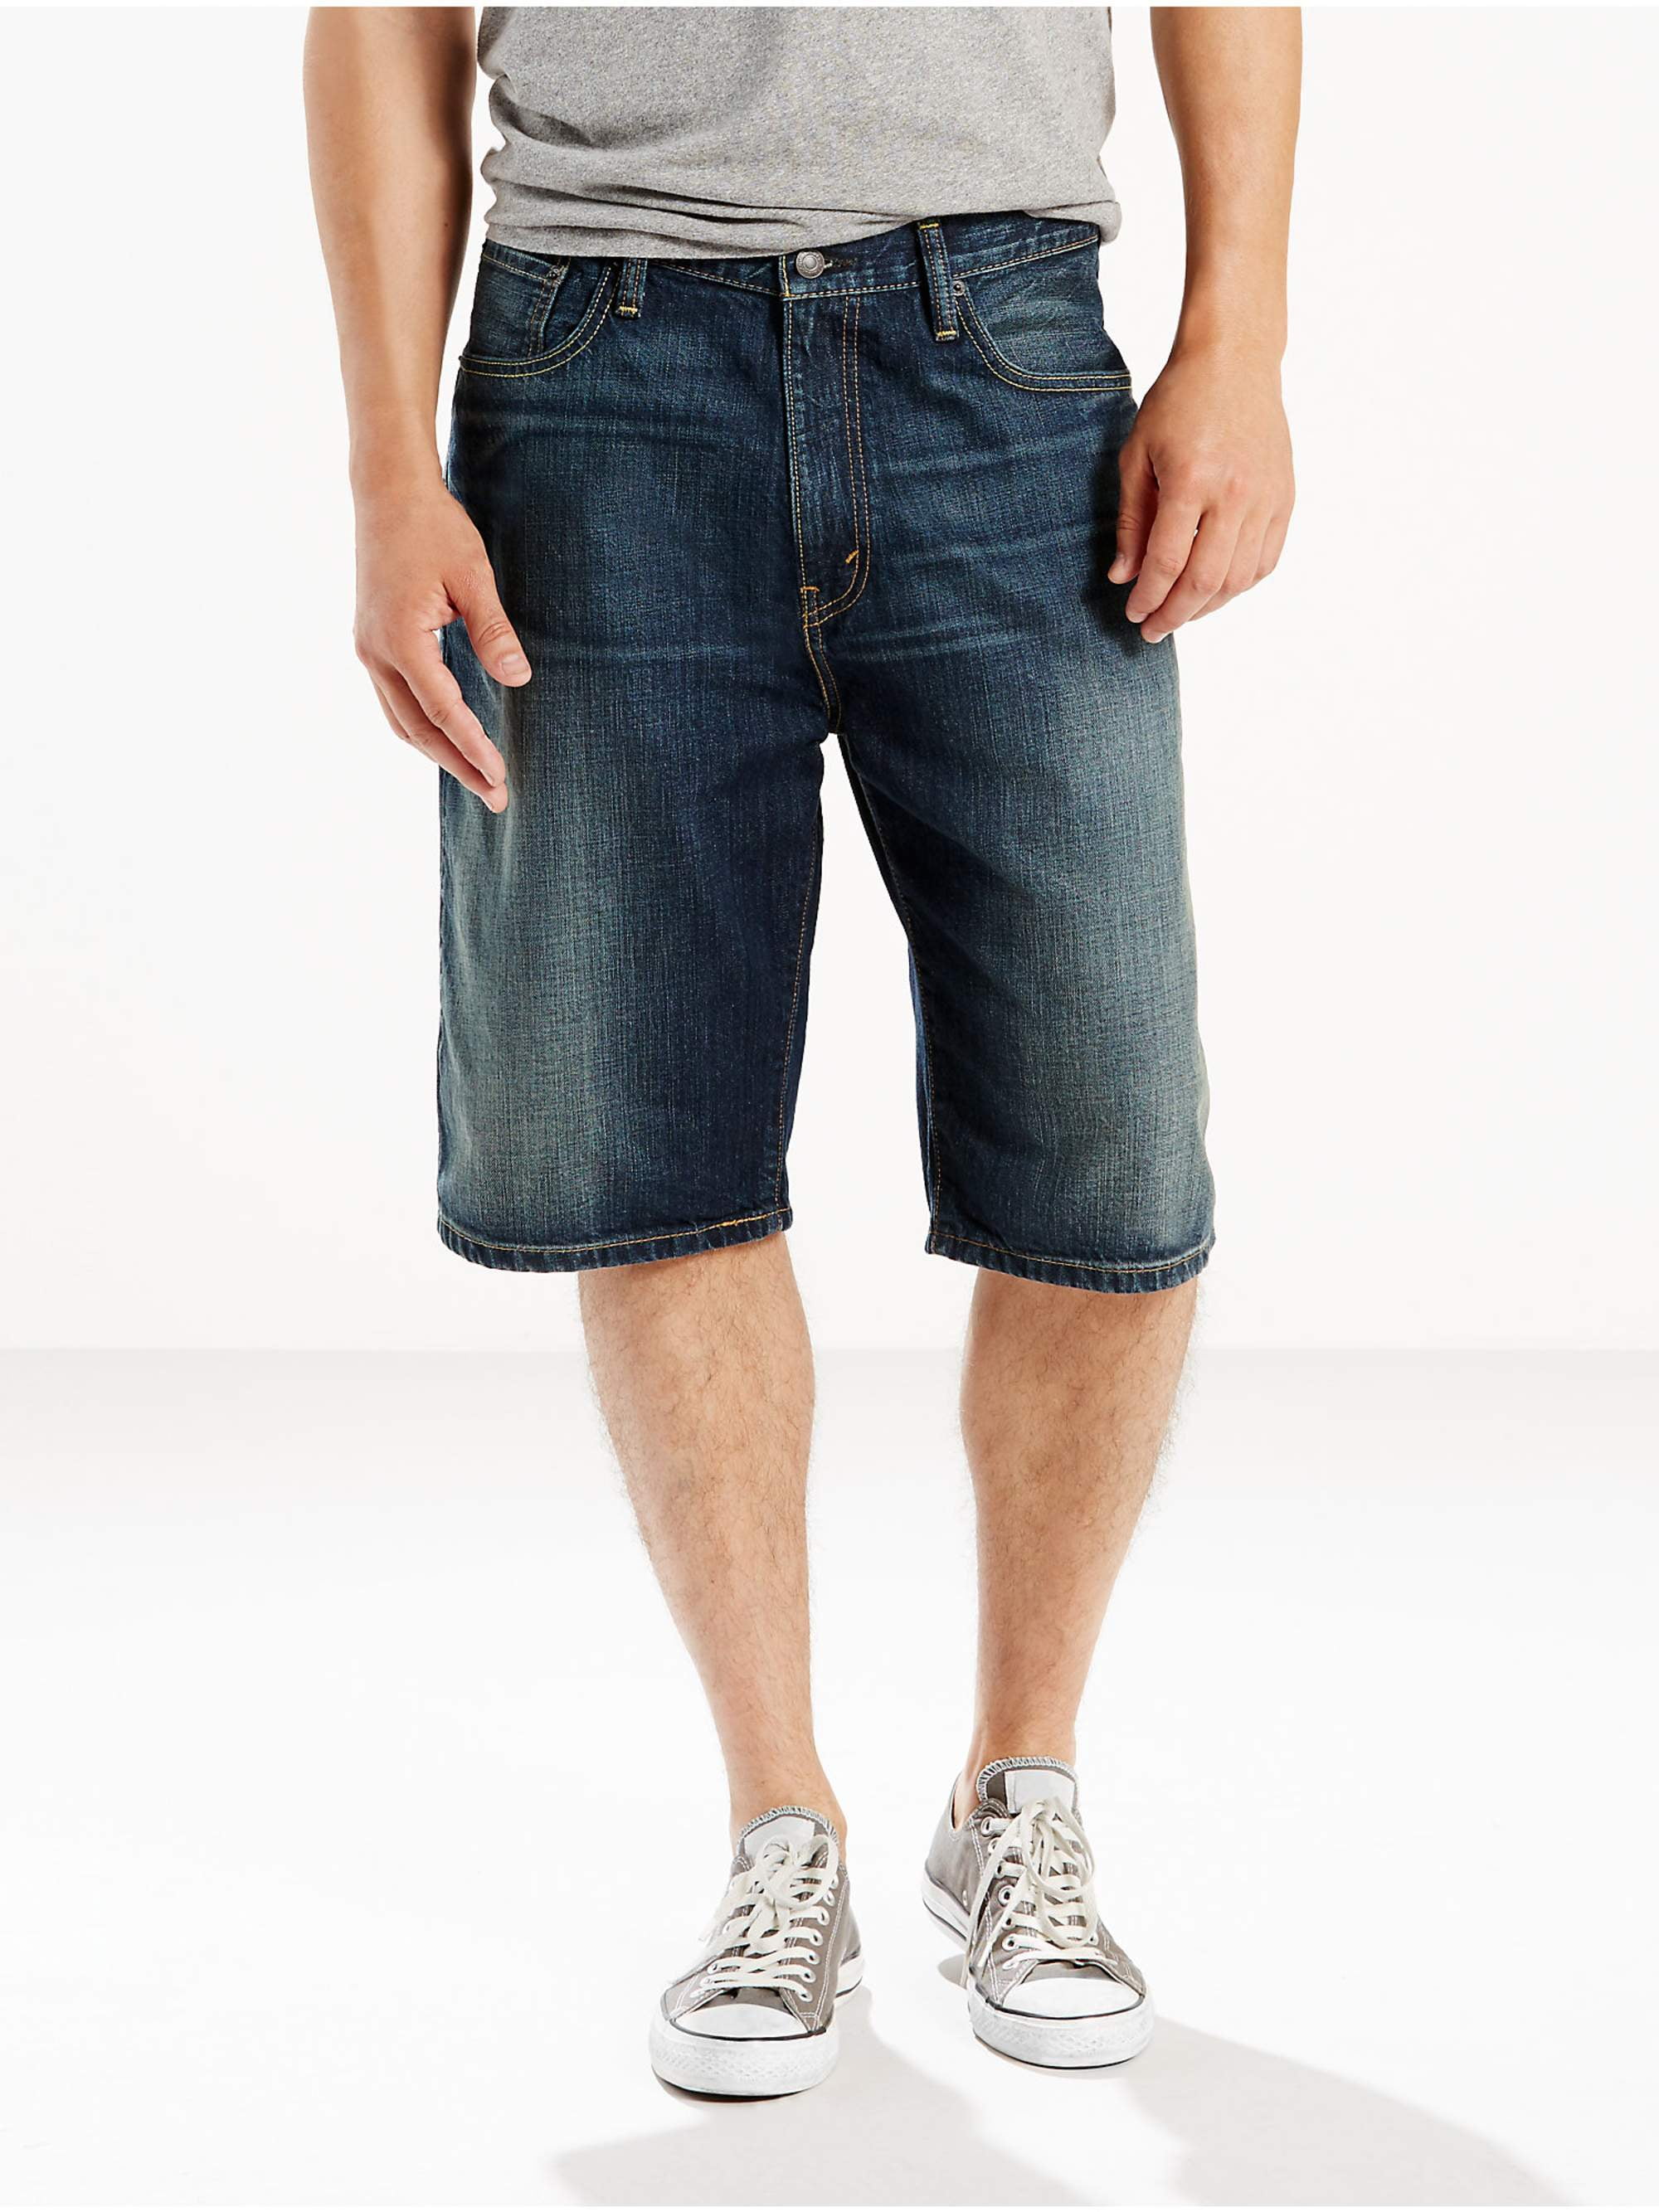 levi's jean shorts mens